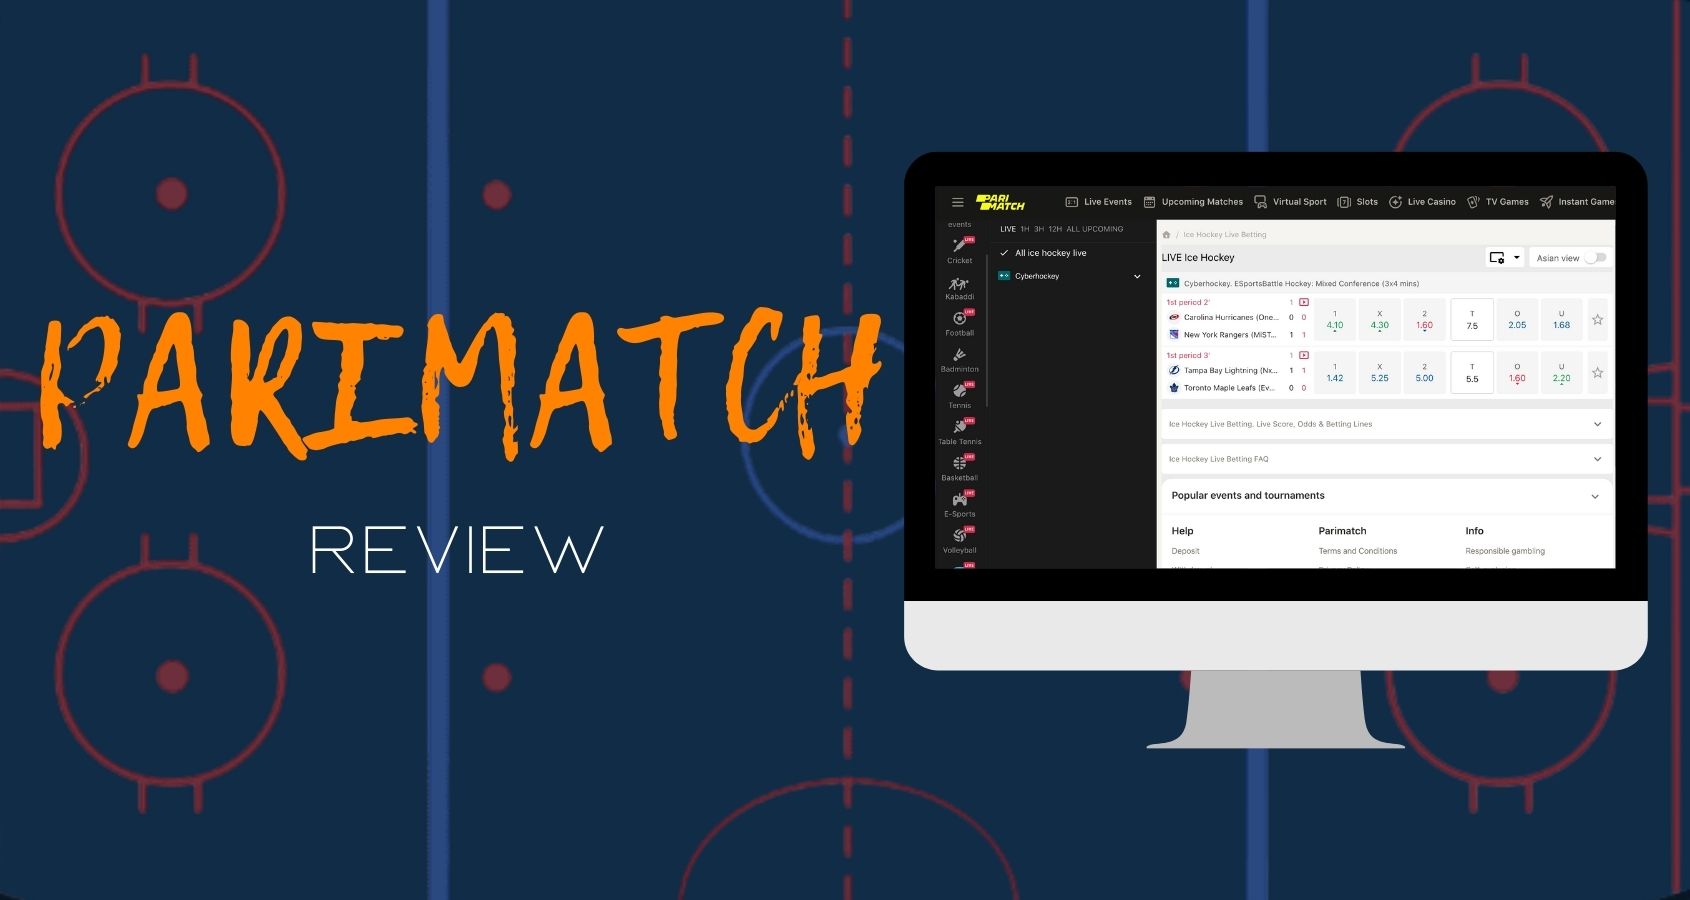 Parimatch Sports betting website overview